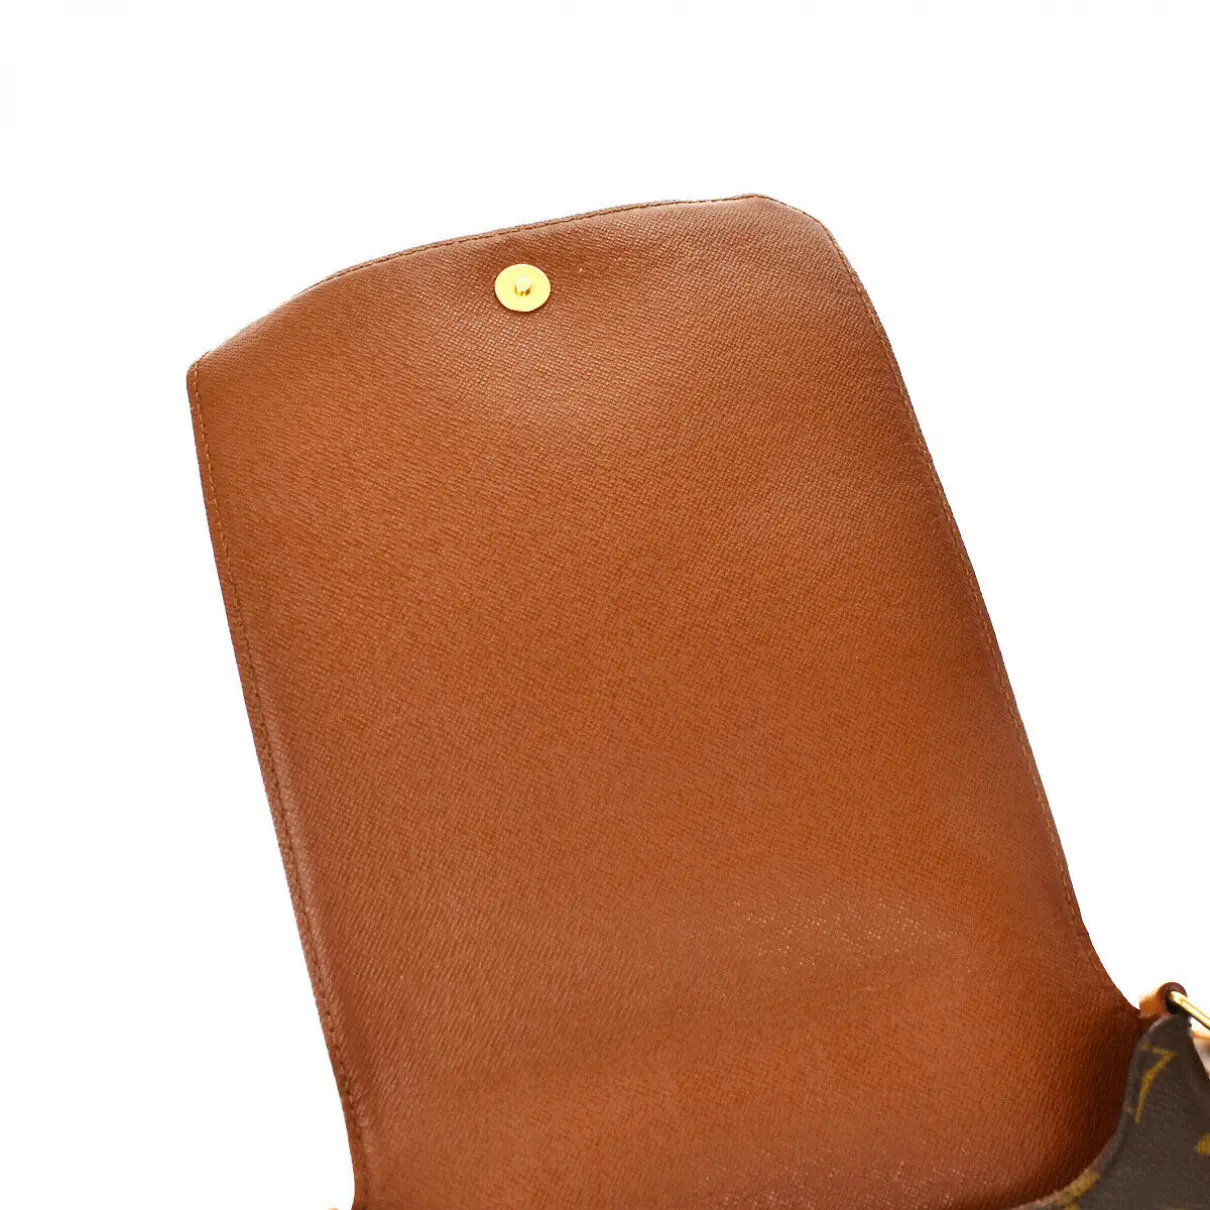 Musette cloth handbag Louis Vuitton